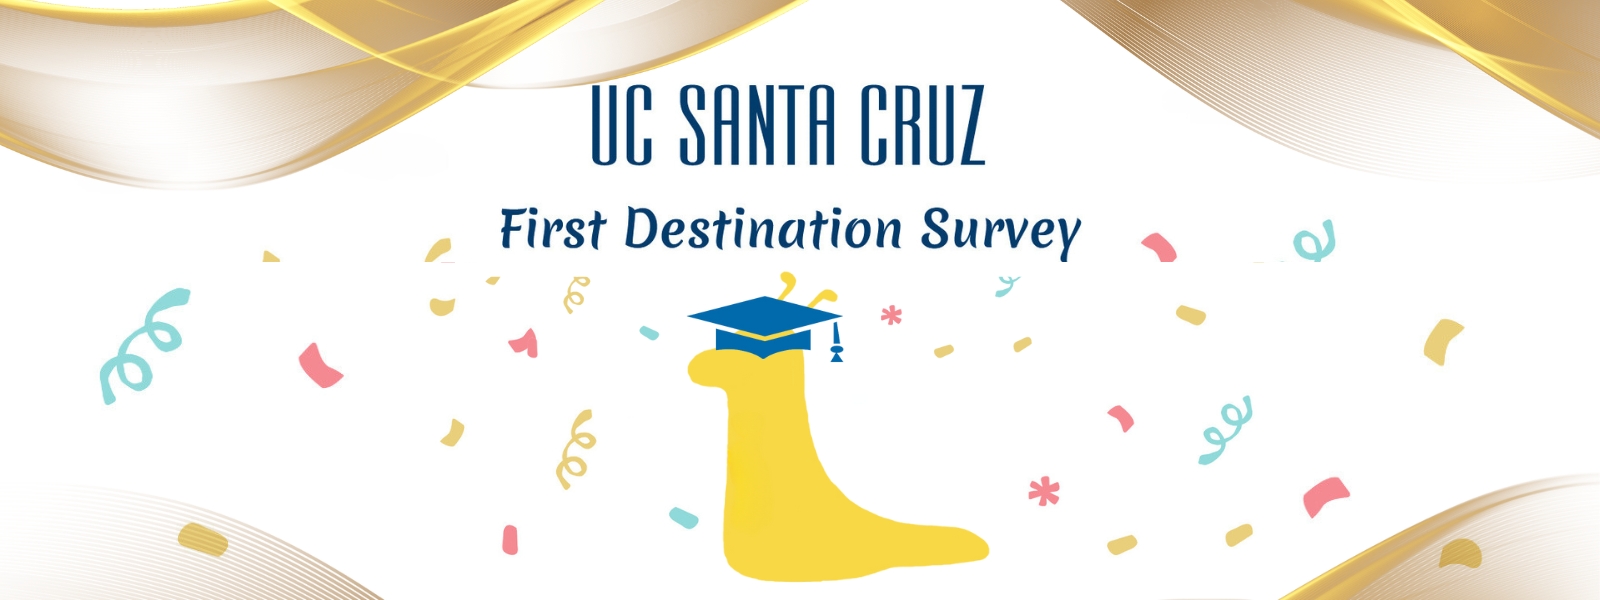 UC Santa Cruz First Destination Survey confetti and banana slug with graduation cap